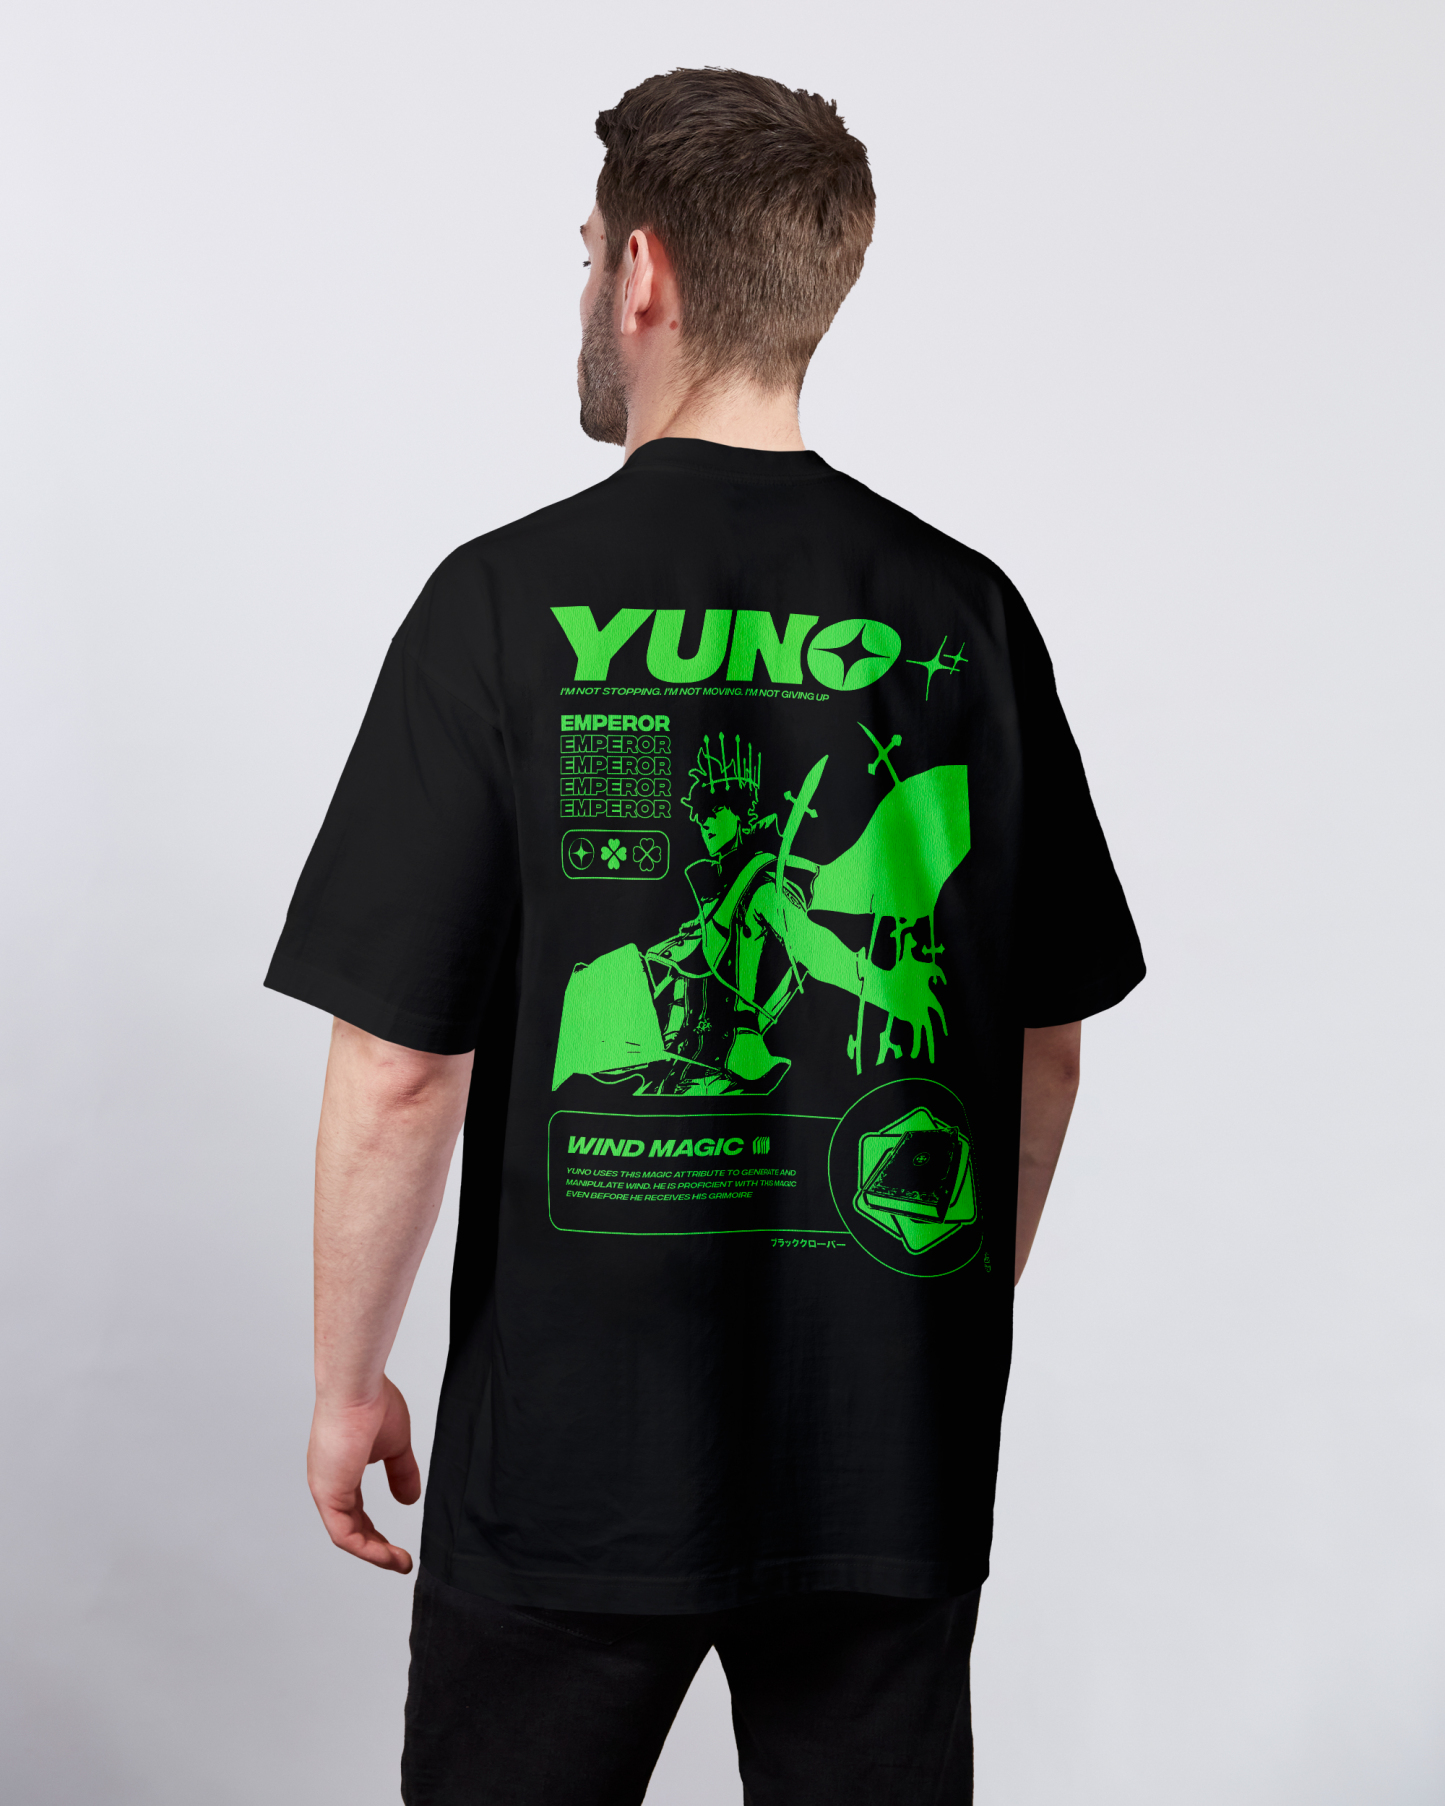 Yuno Black Clover | T-Shirt